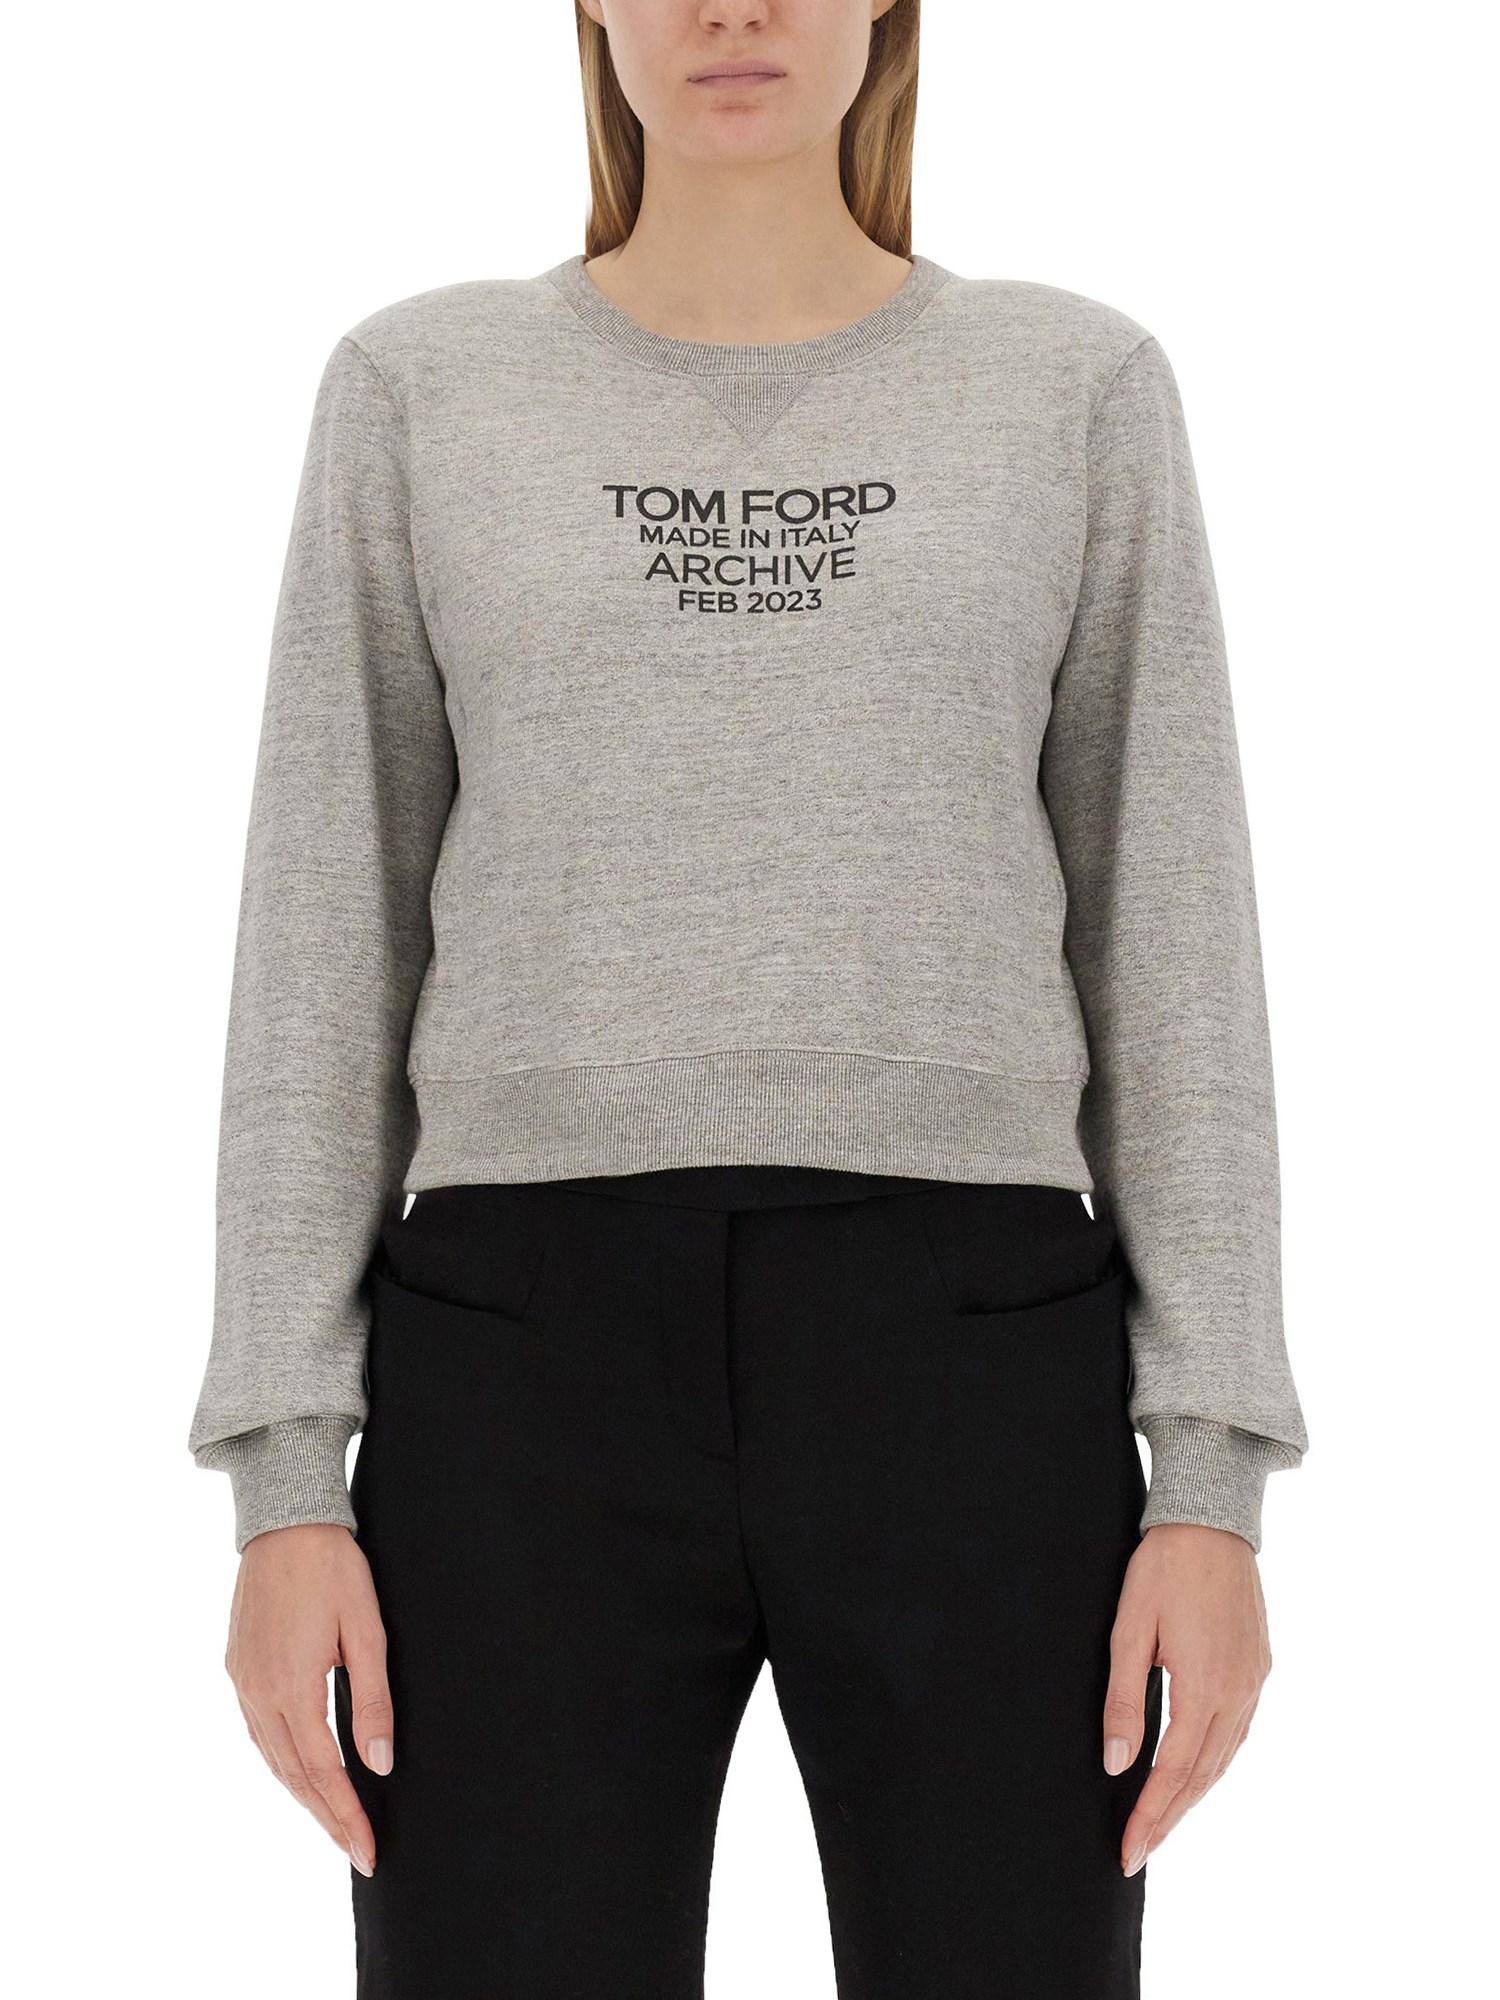 tom ford sweatshirt with logo